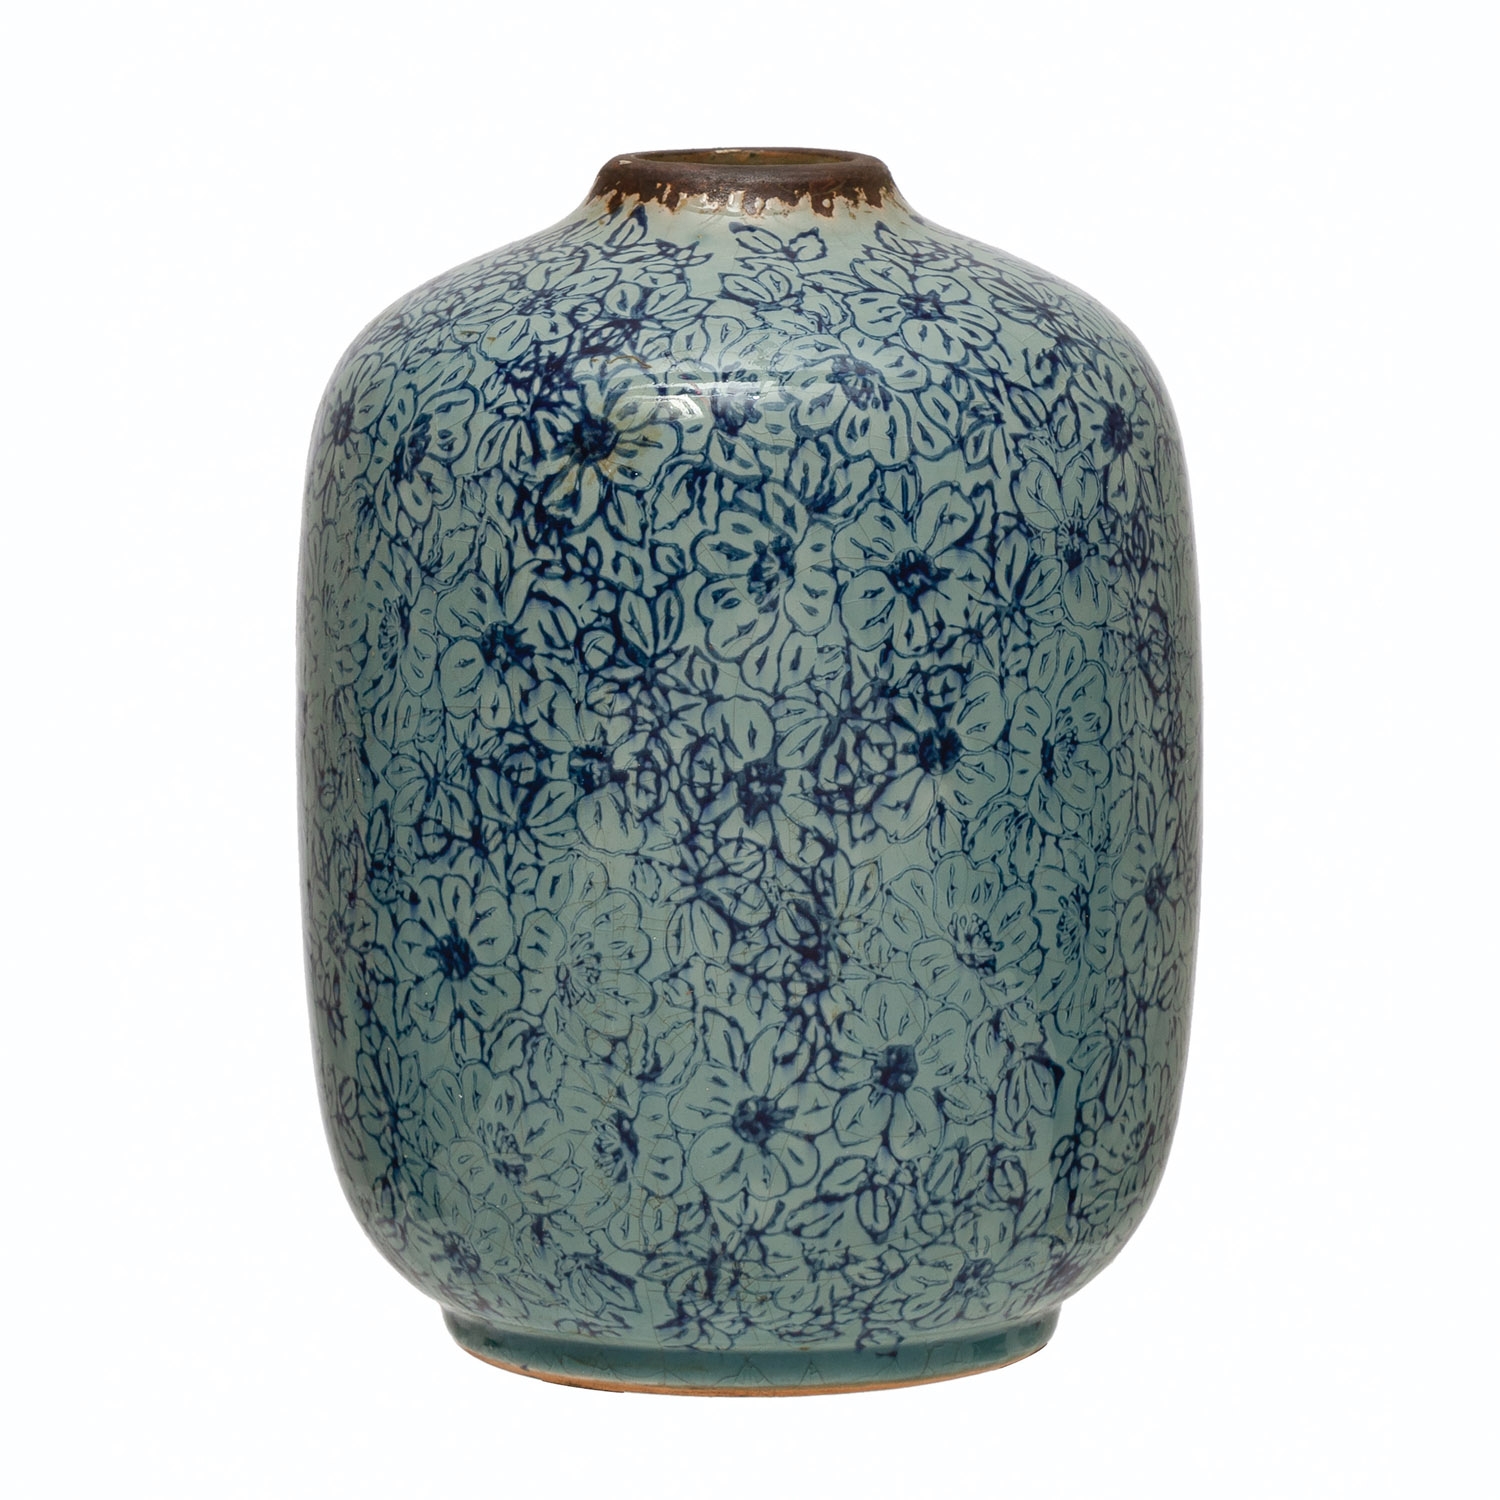 Terra-cotta Vase with Floral Pattern - Image 0